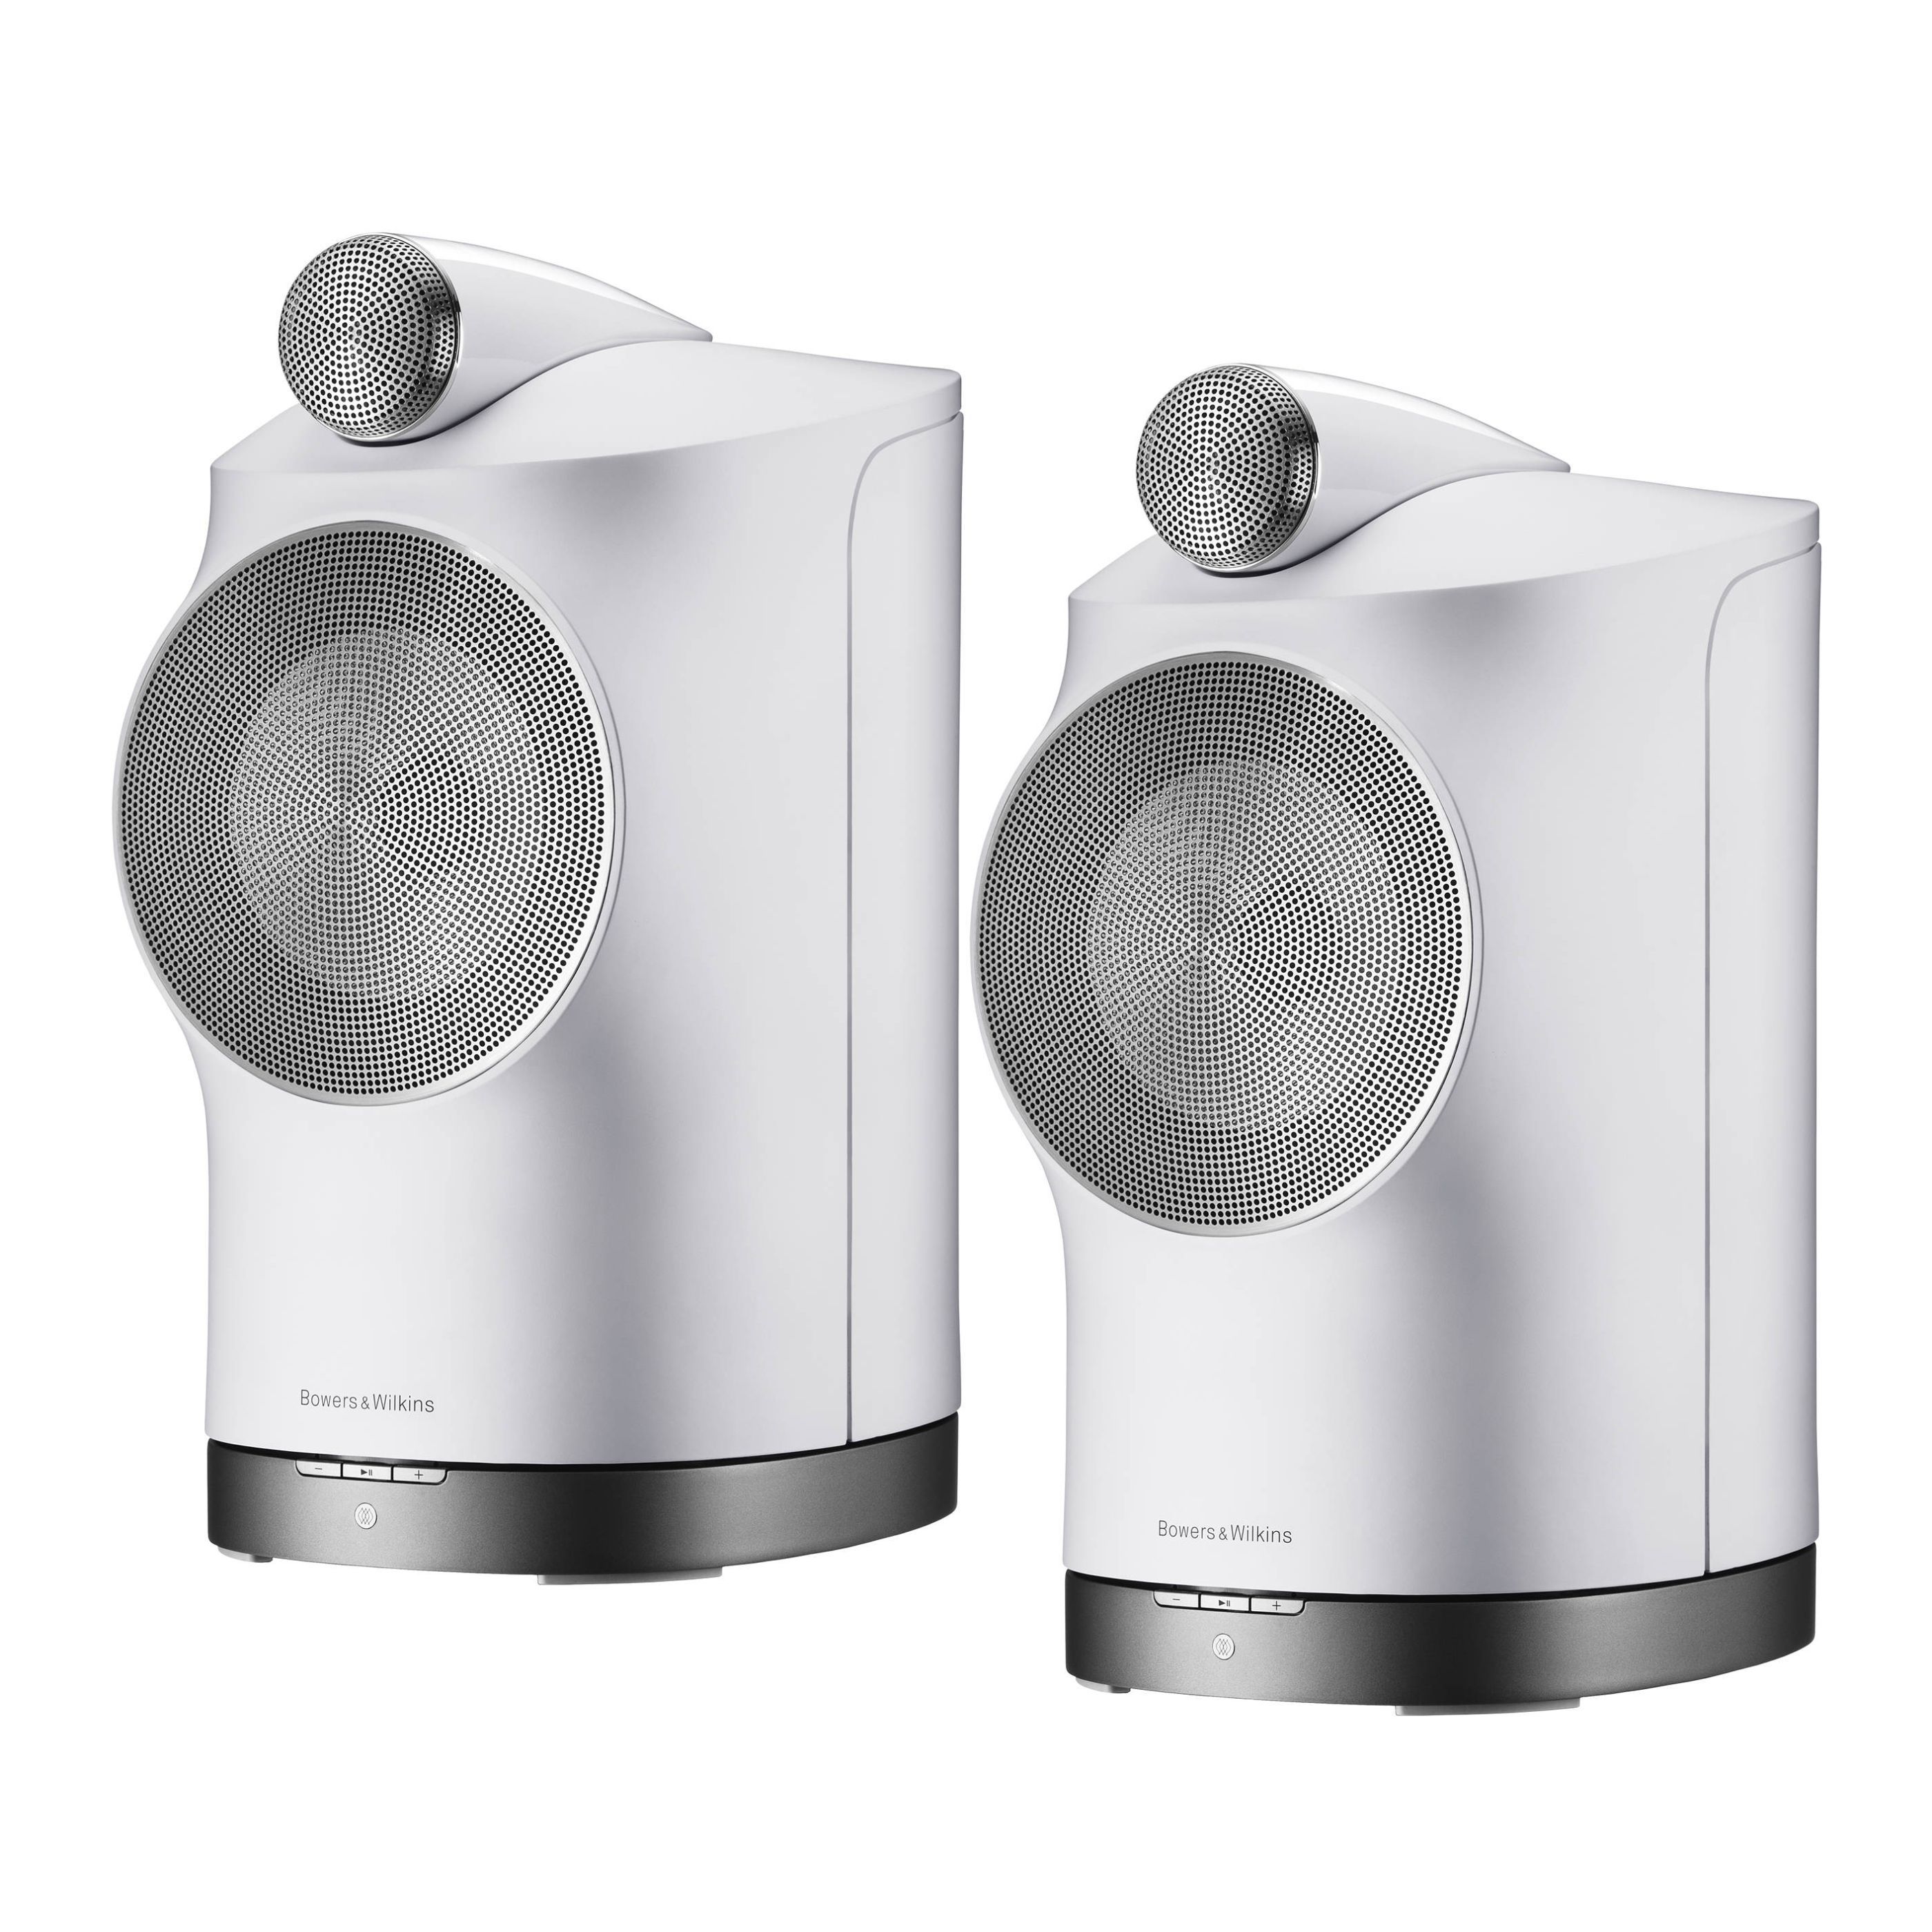 7 of 2021 Wireless Multi-Room Speakers